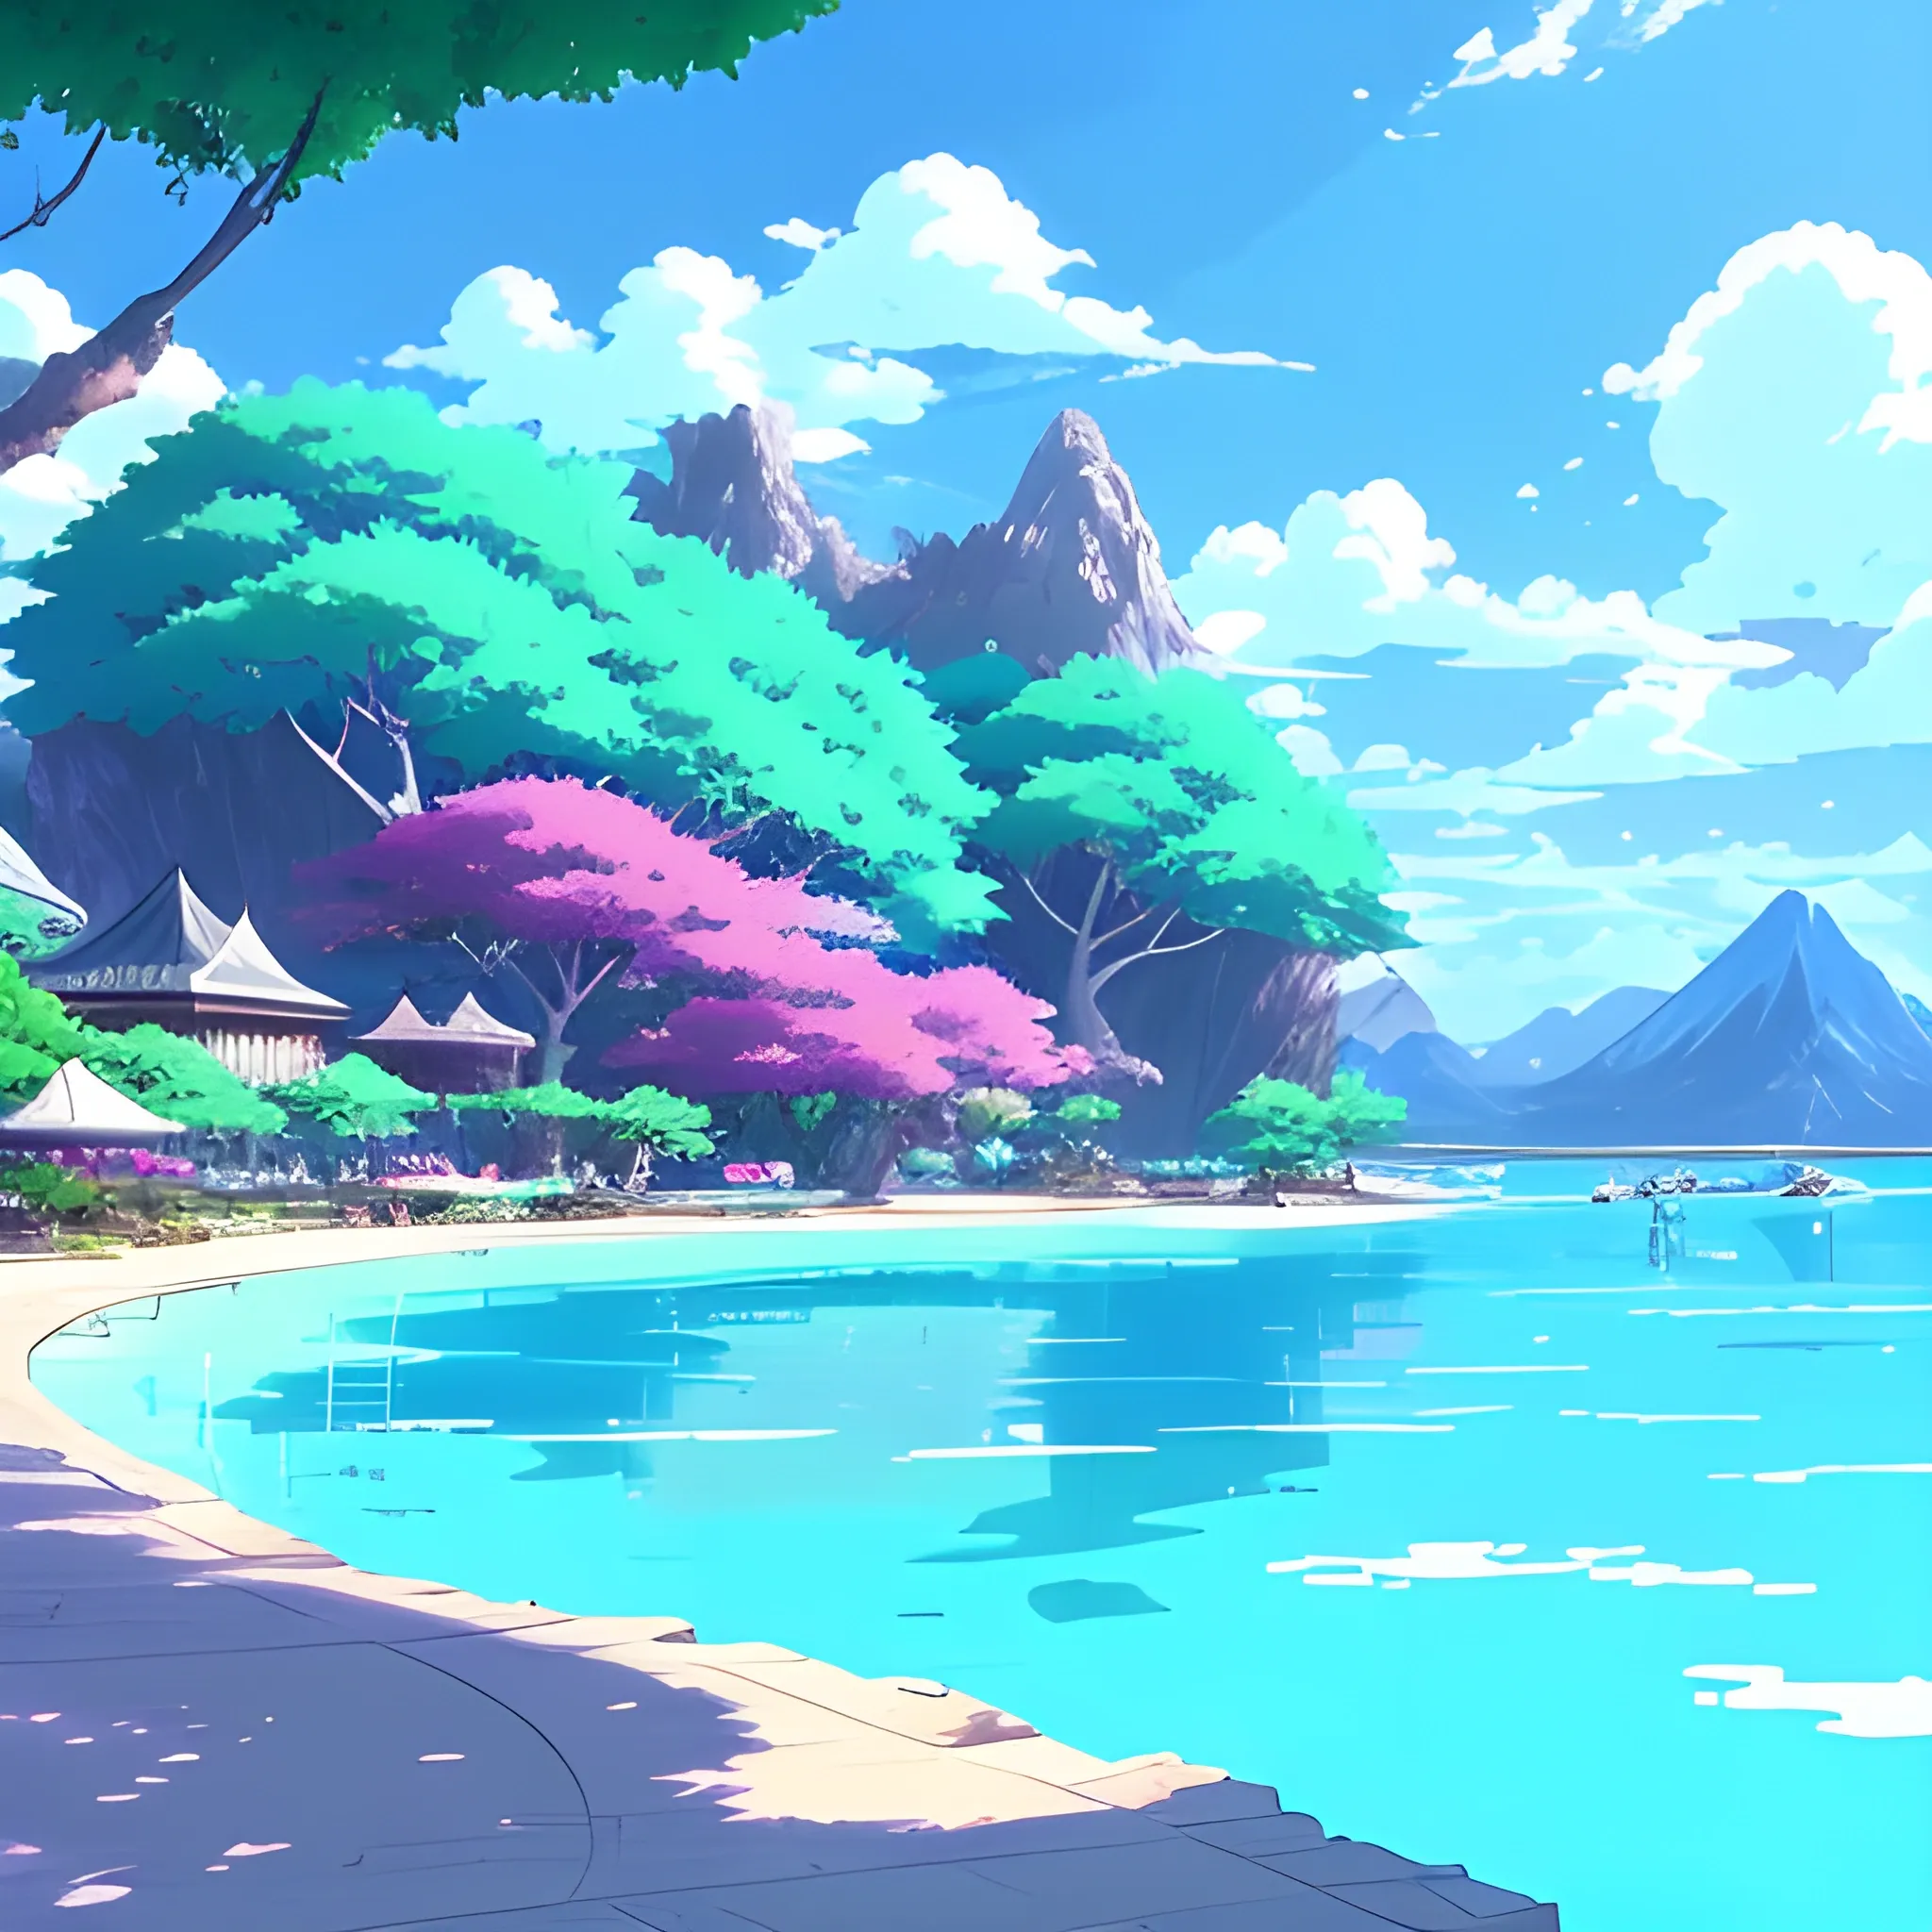 azure bliss lagoon with brand new colors, anime landscape, makoto shinkai and hayao miyazaki, breathtaking, colourful